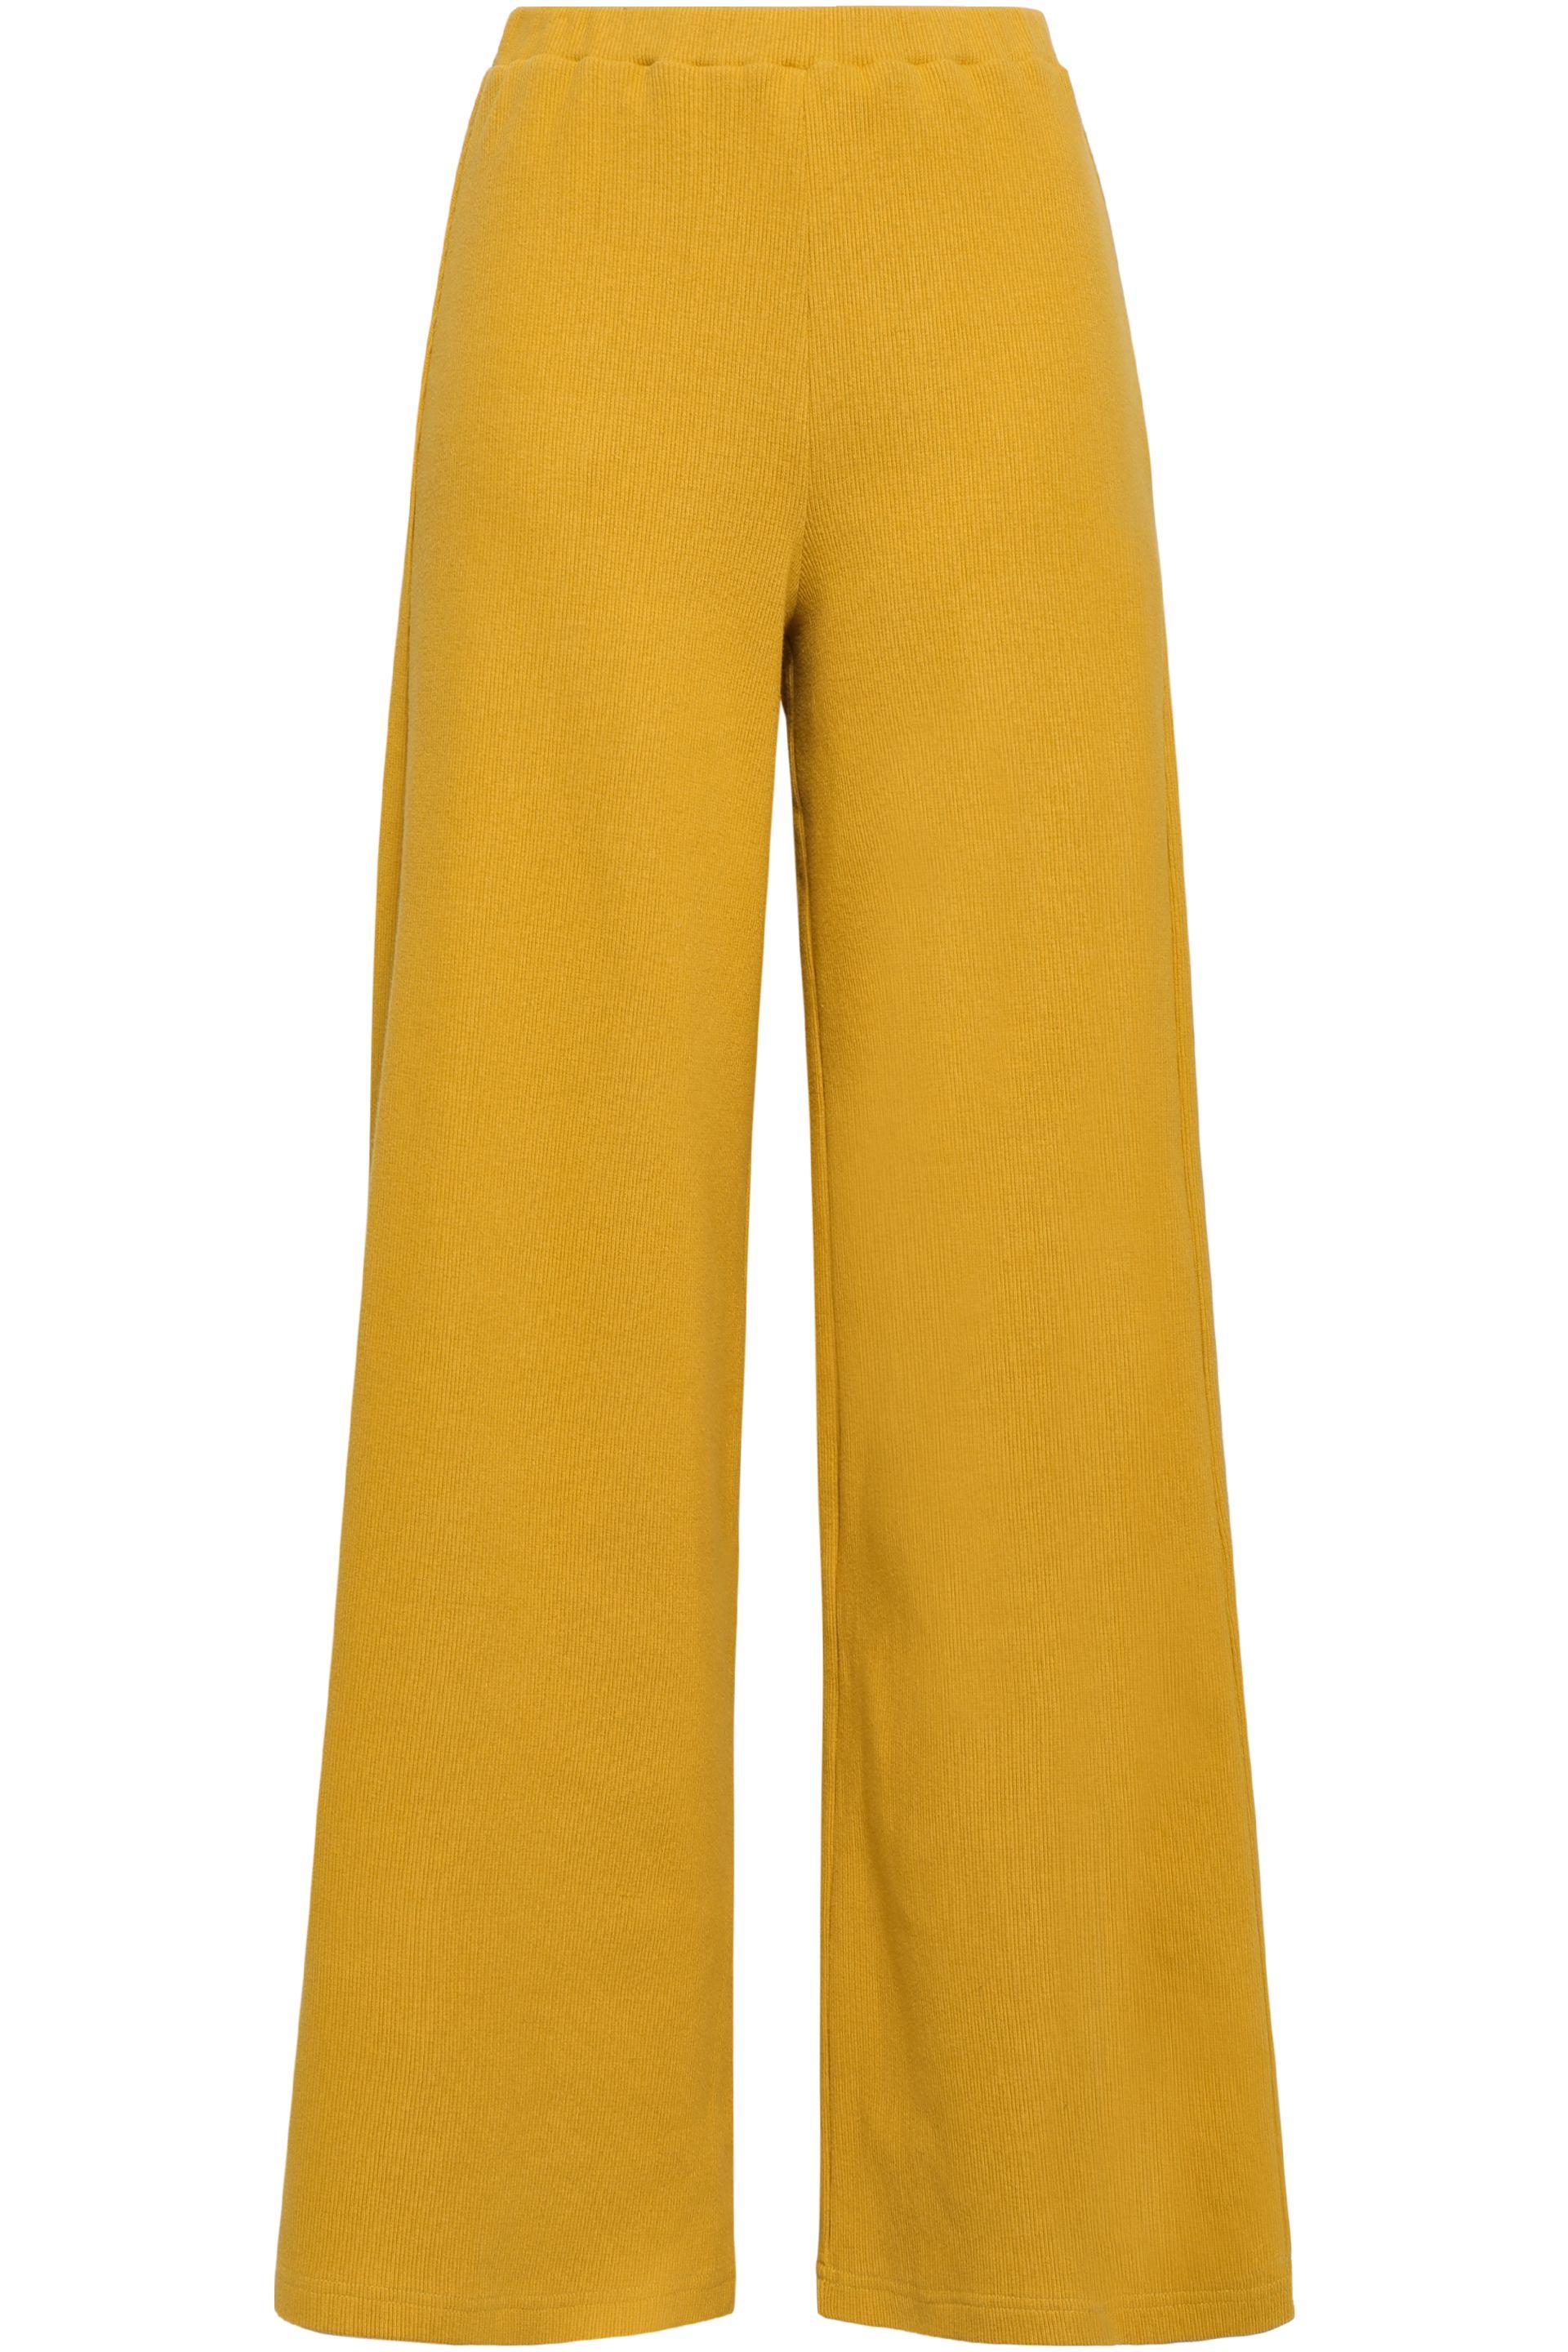 Simon Miller Ribbed Cotton-blend Wide-leg Pants Saffron in Yellow - Lyst